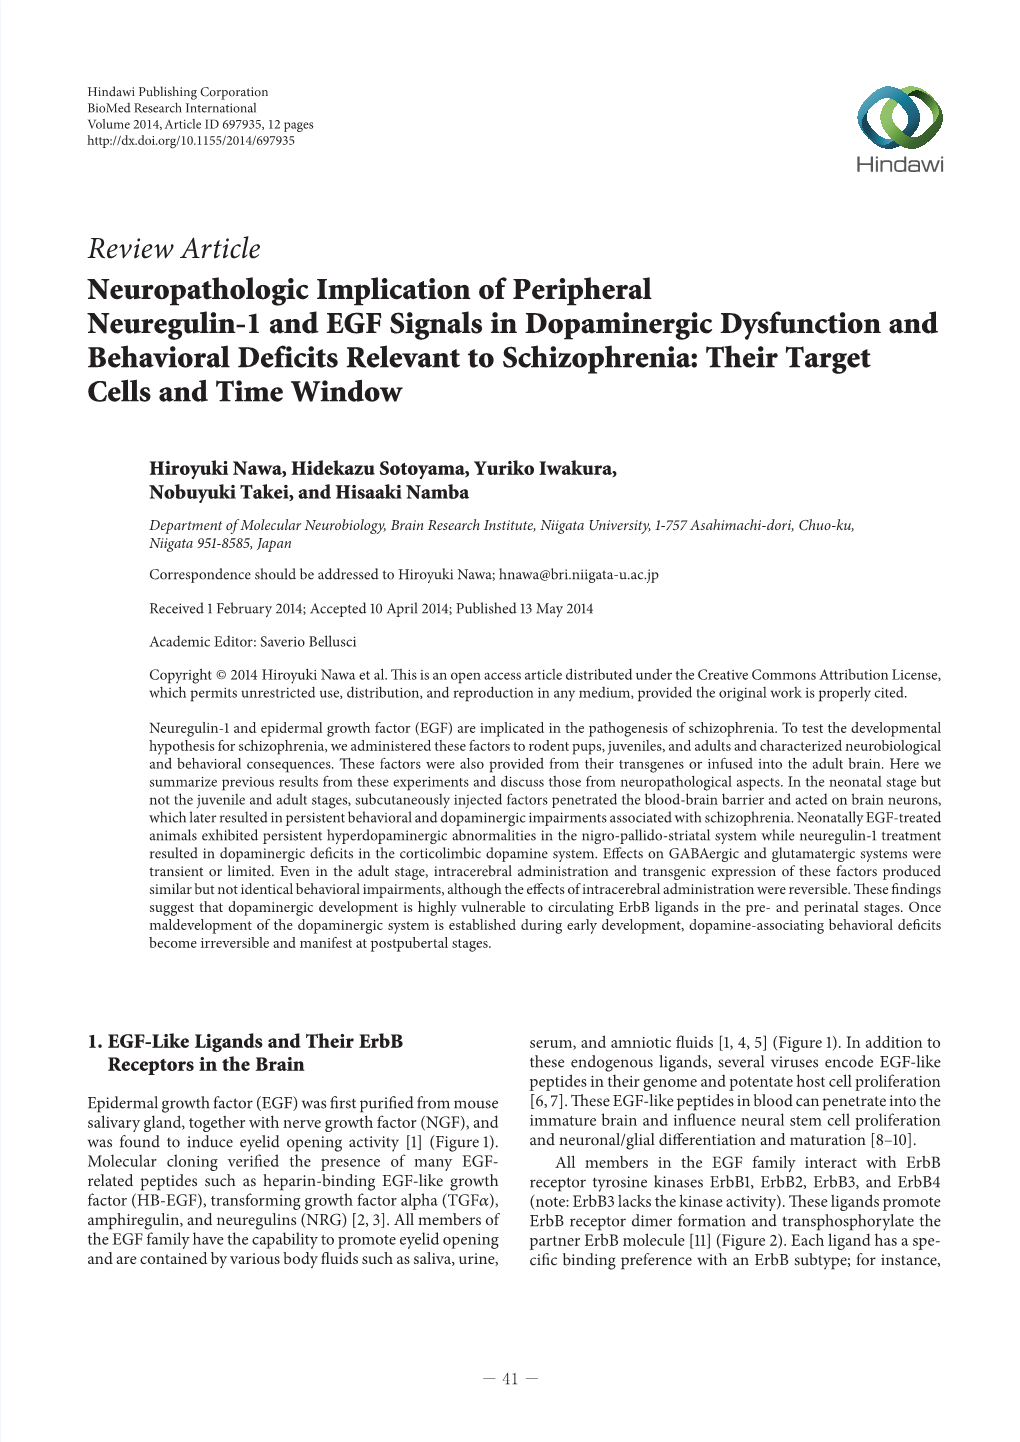 Review Article Neuropathologic Implication of Peripheral